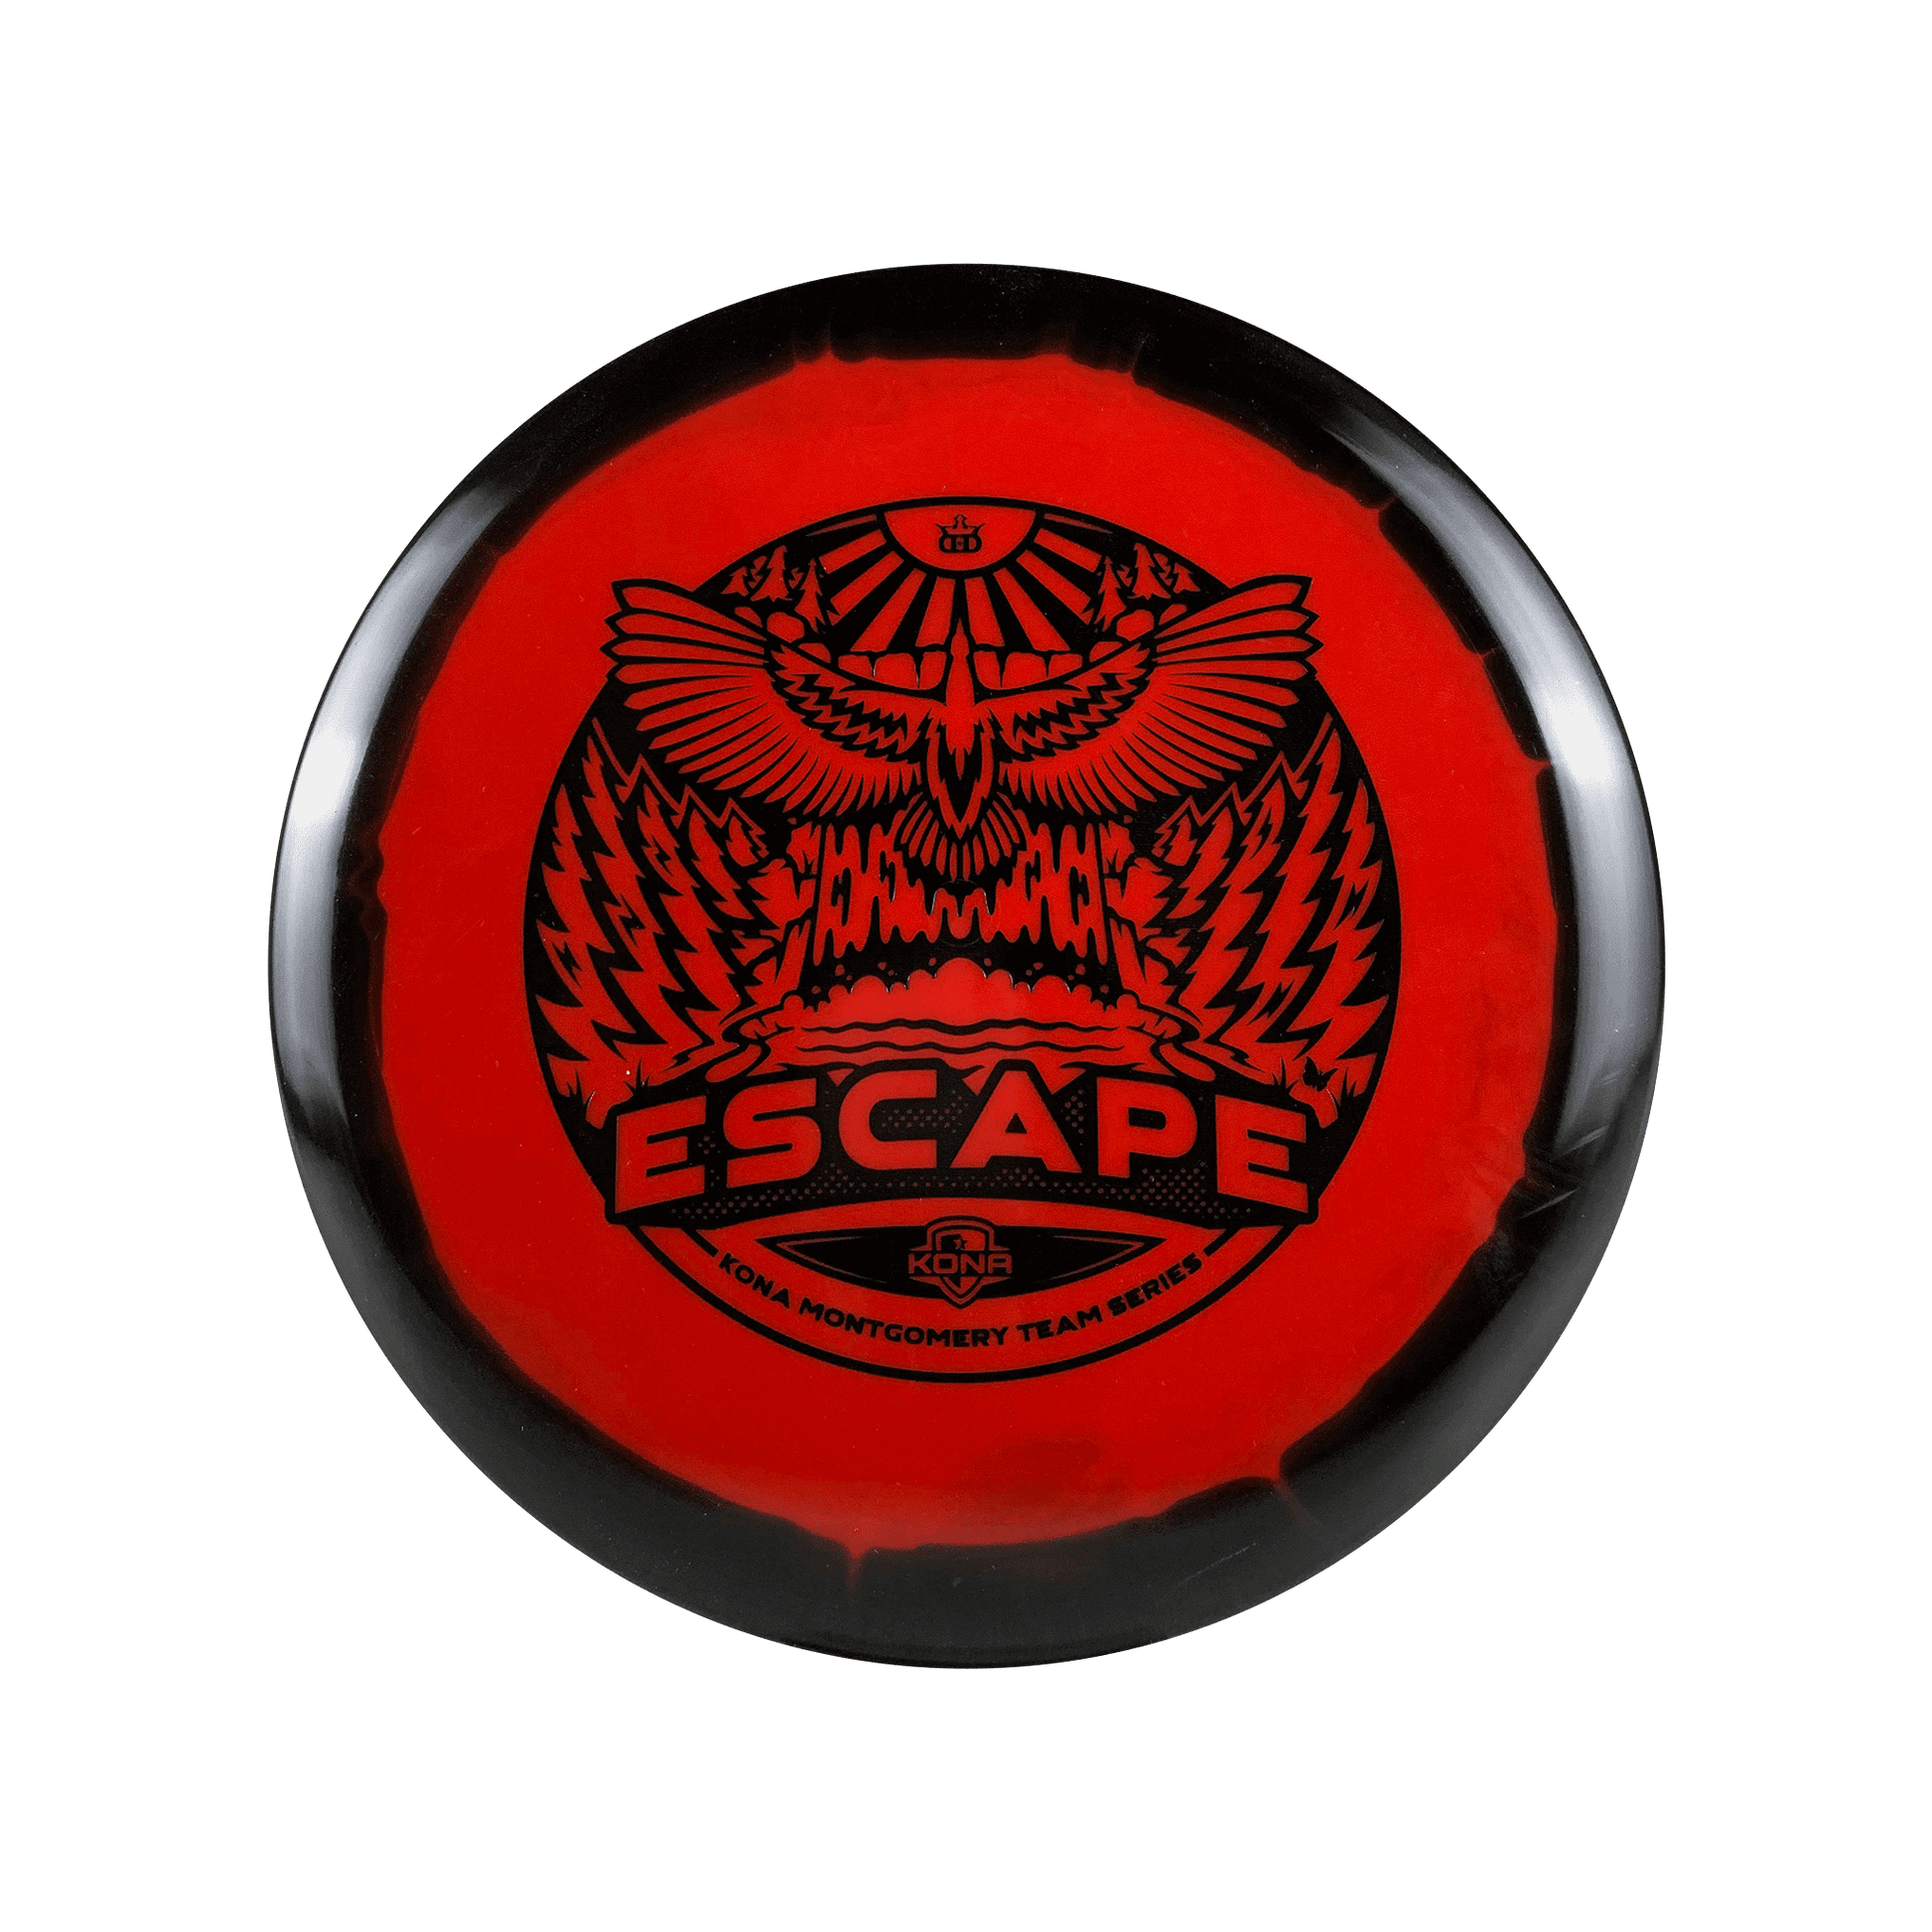 Fuzion Orbit Escape - Kona Montgomery Team Series Disc Dynamic Discs multi / red 175 